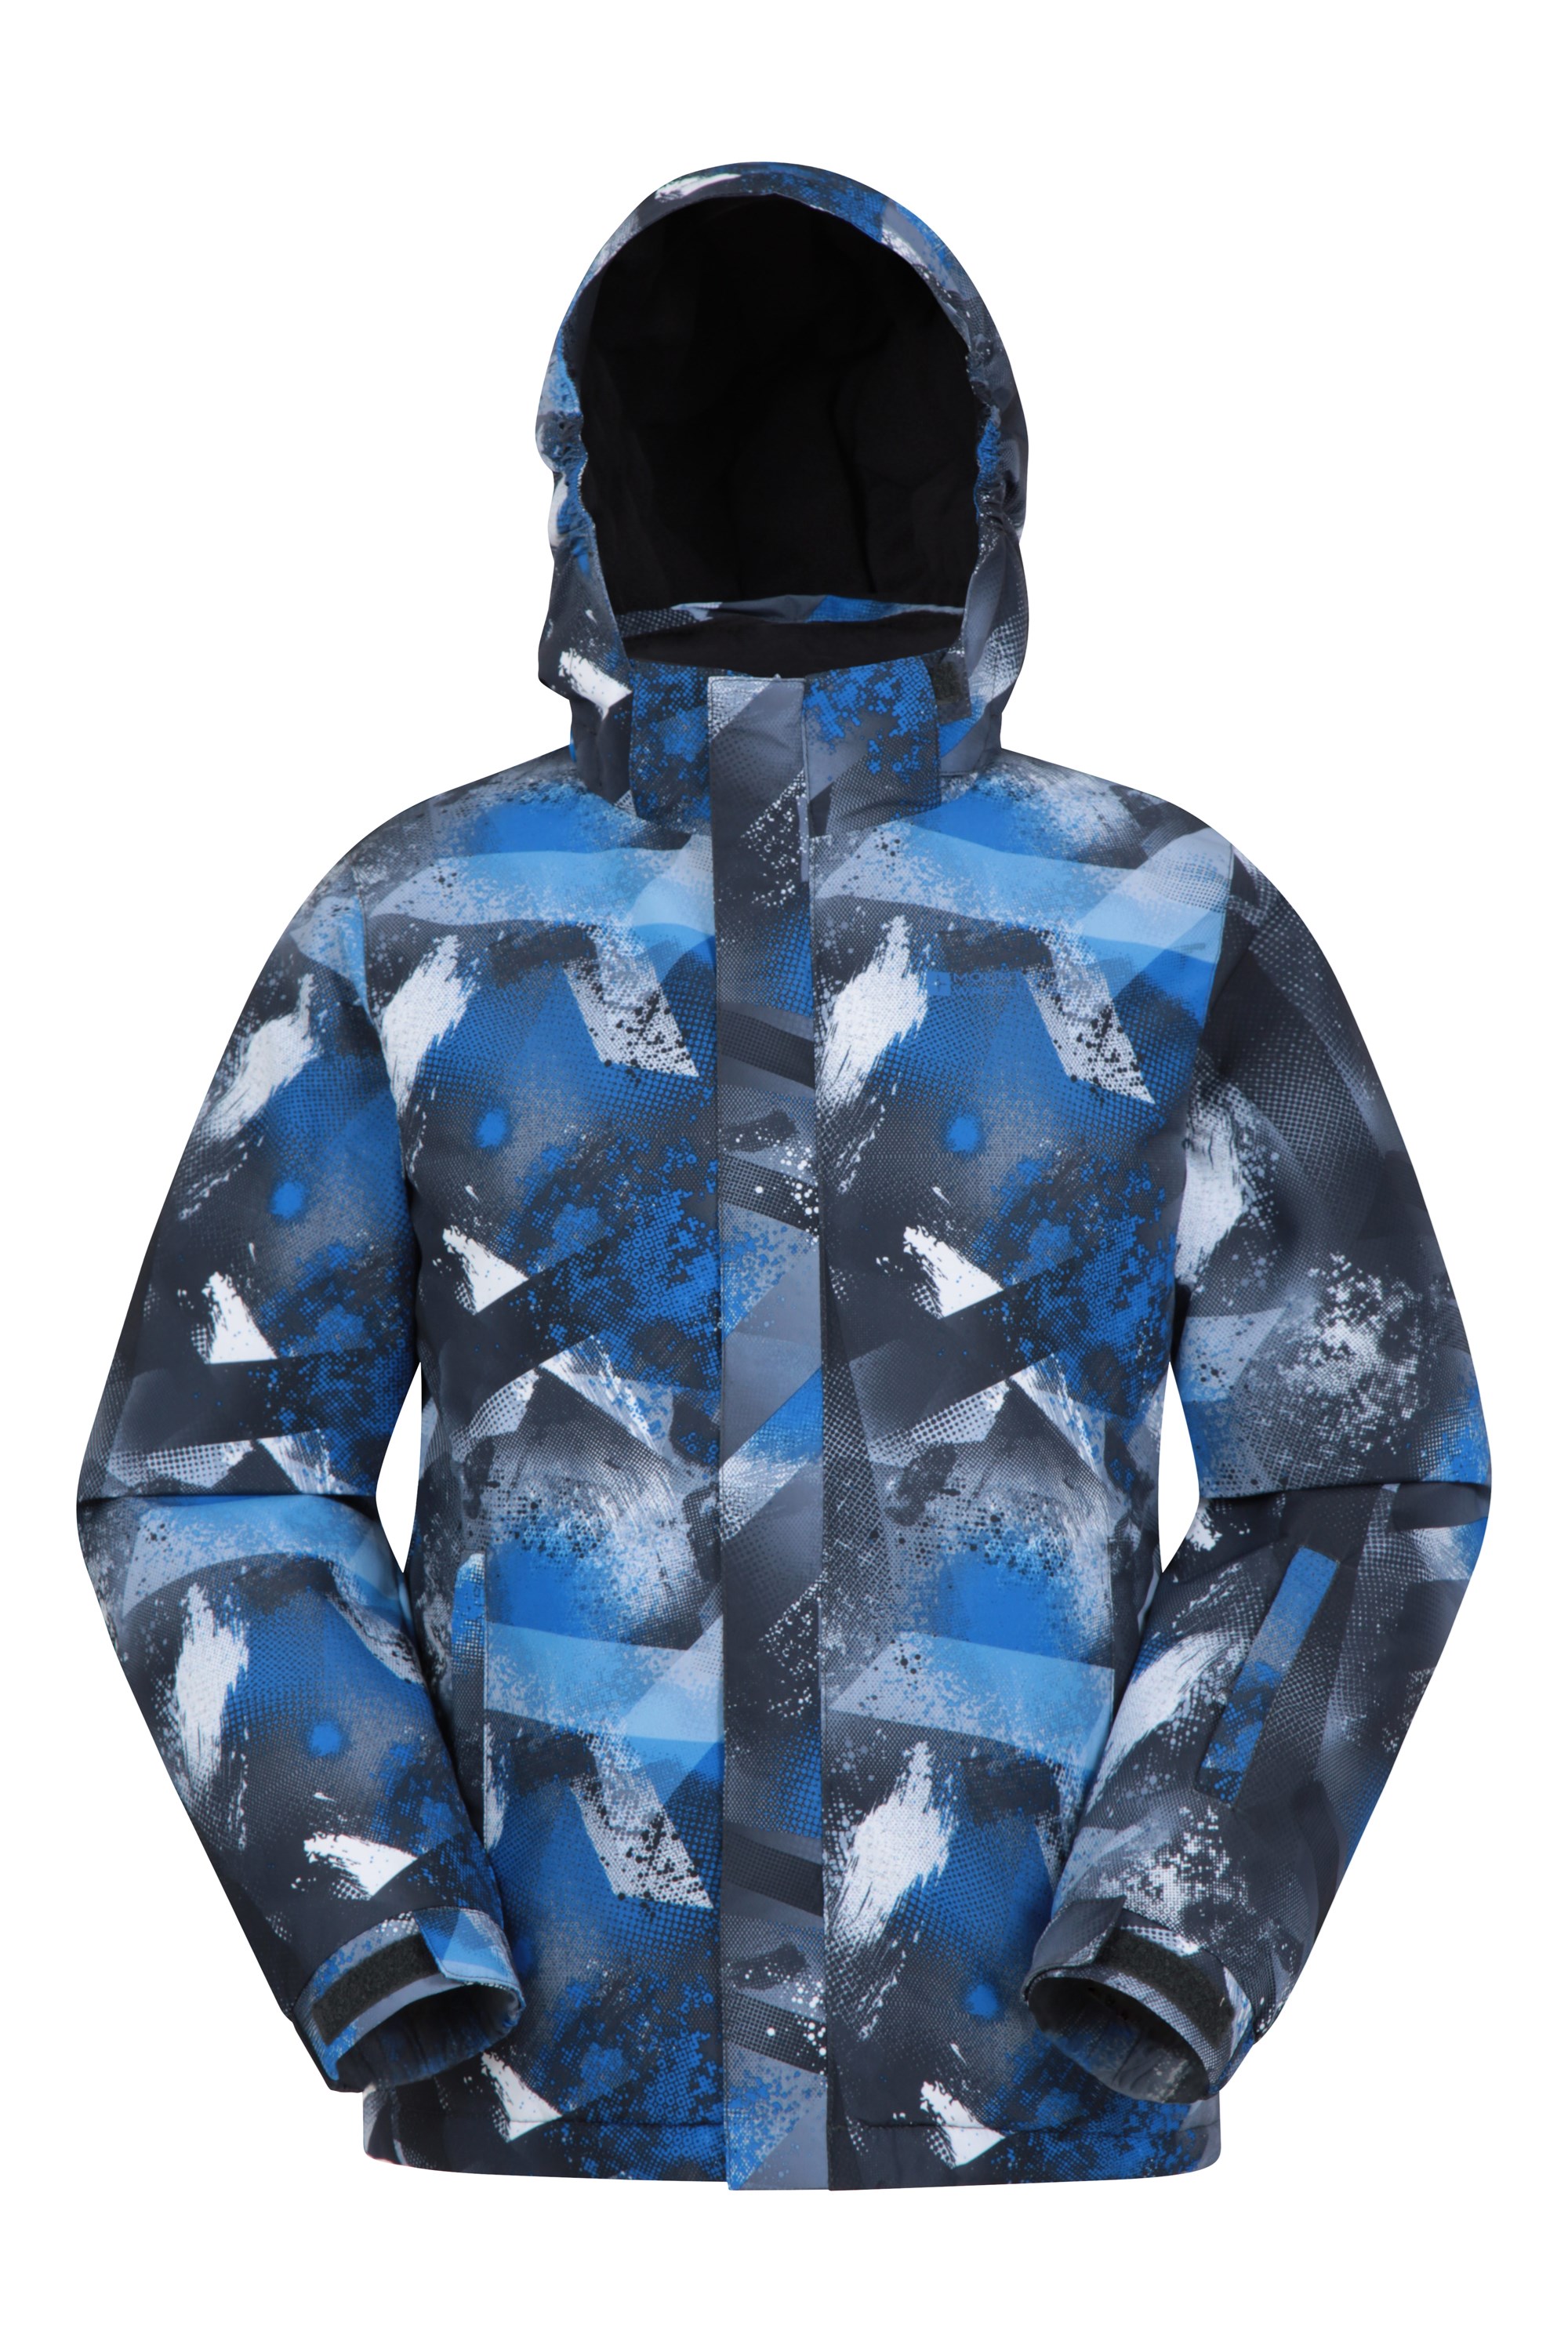 Mountain Warehouse Snow Storm Kids Printed Ski Jackt